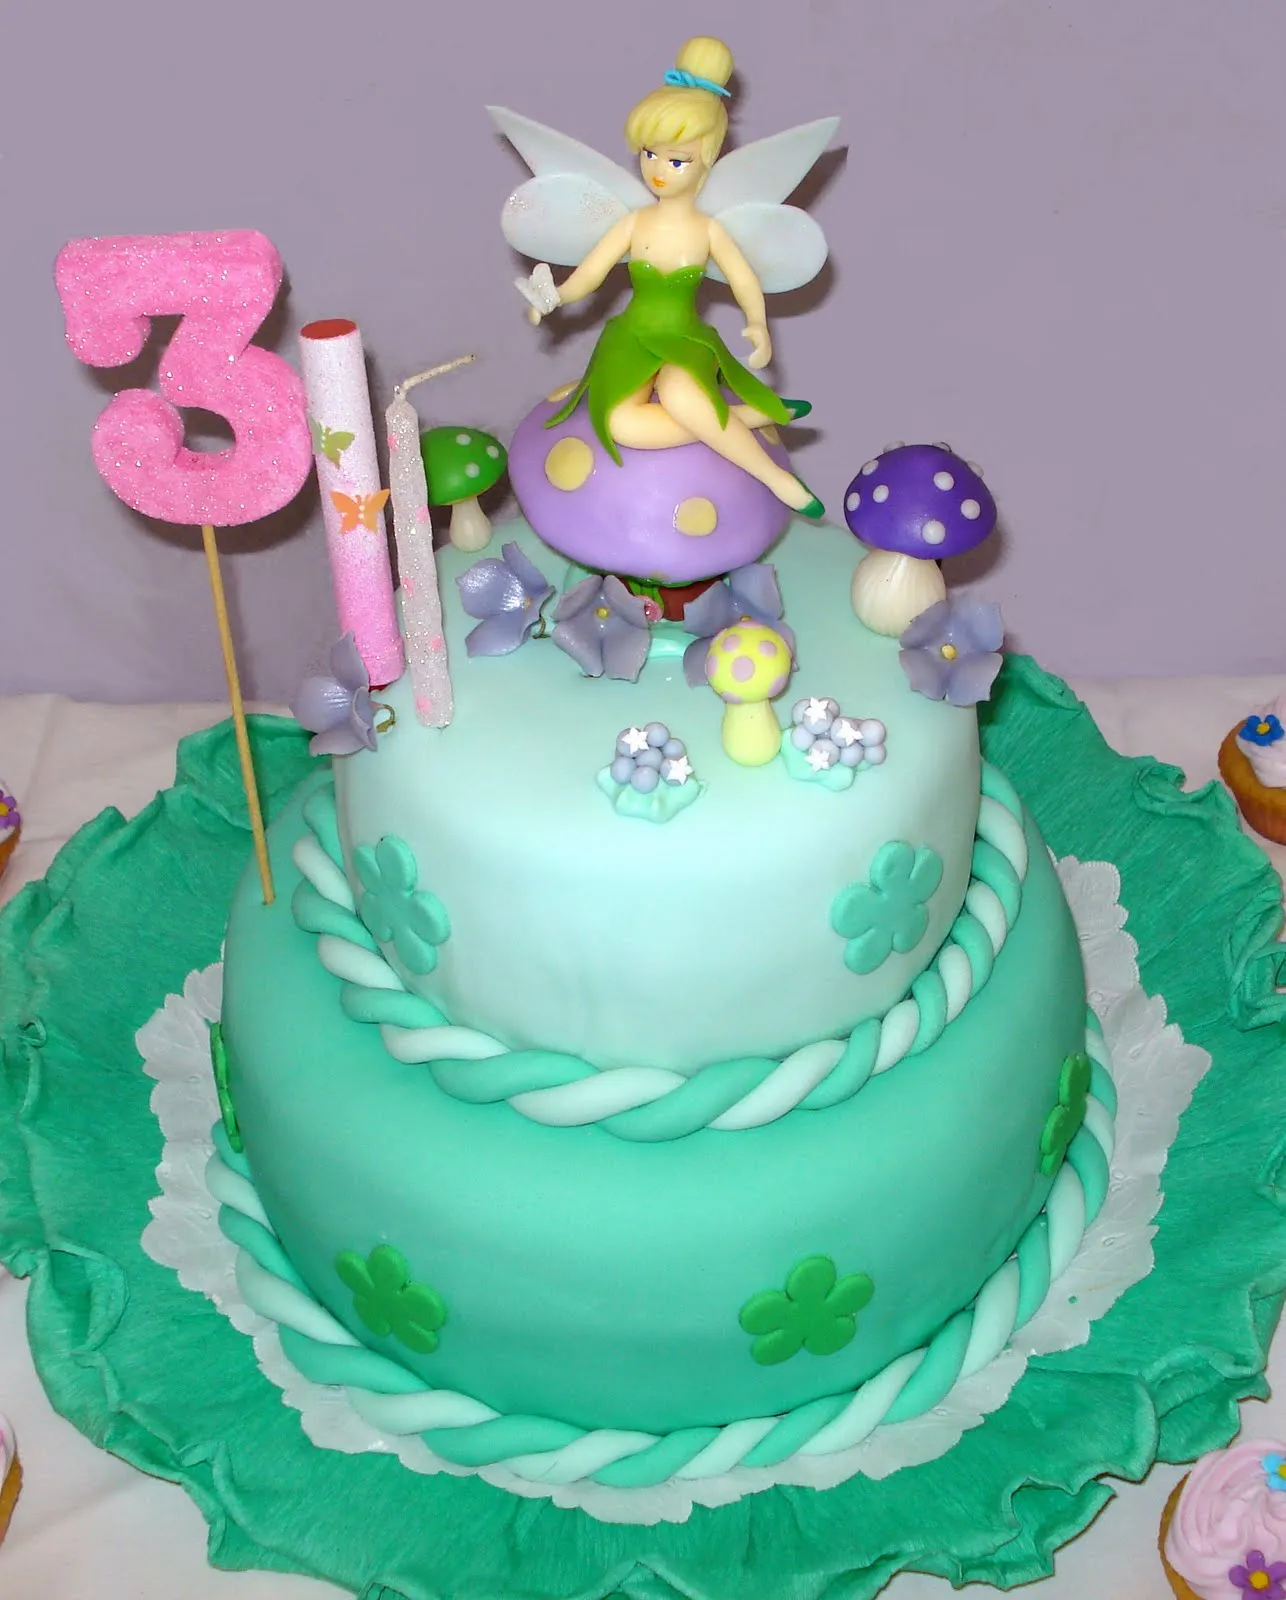 Torta decoradas de Tinkerbell - Imagui